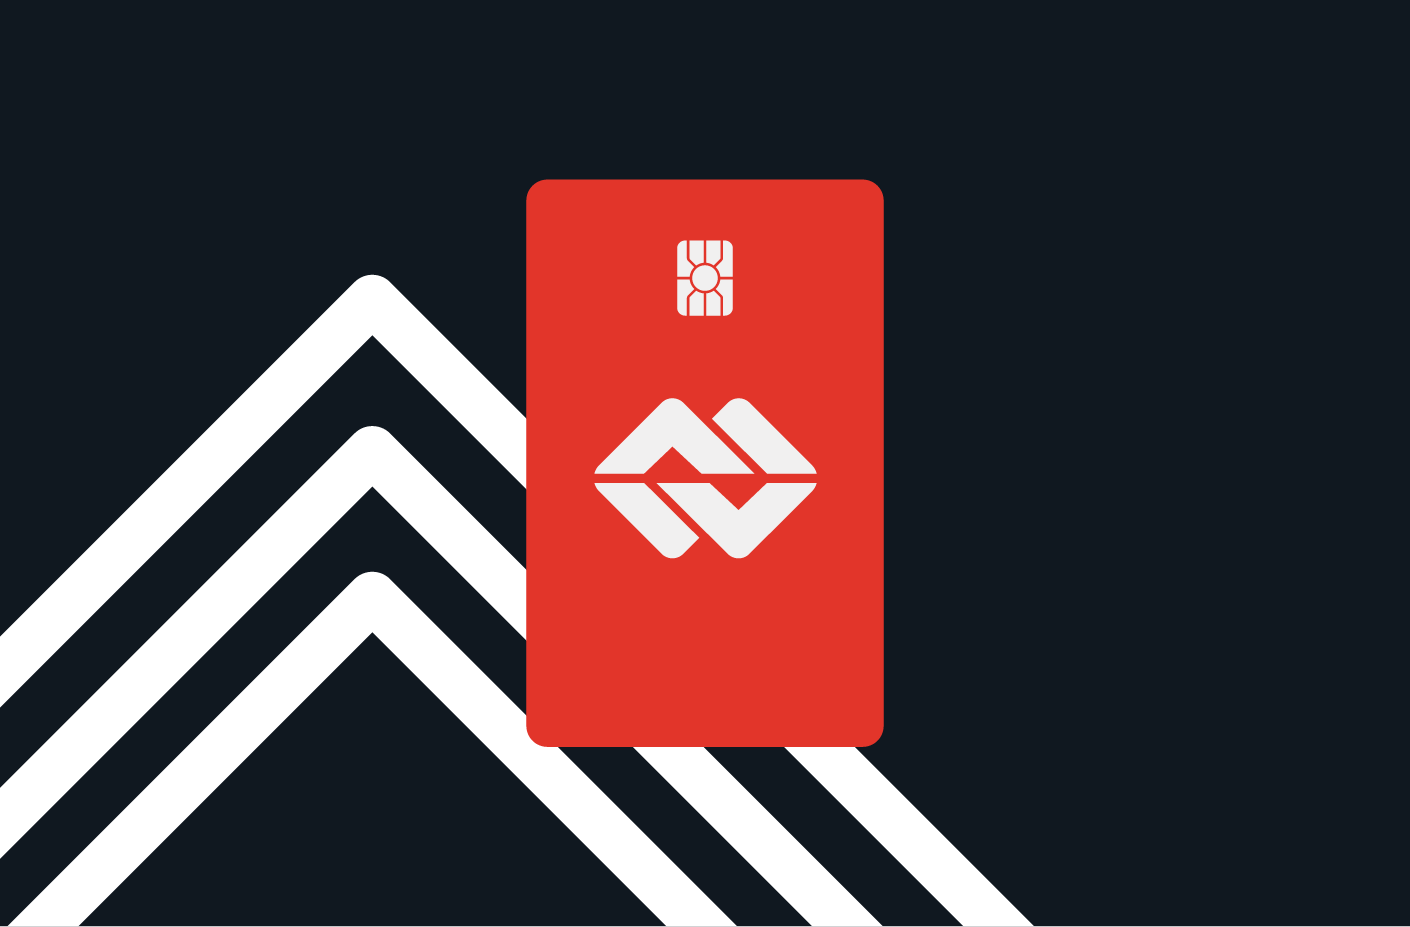 Red Visa card illustration on black background with white stripes